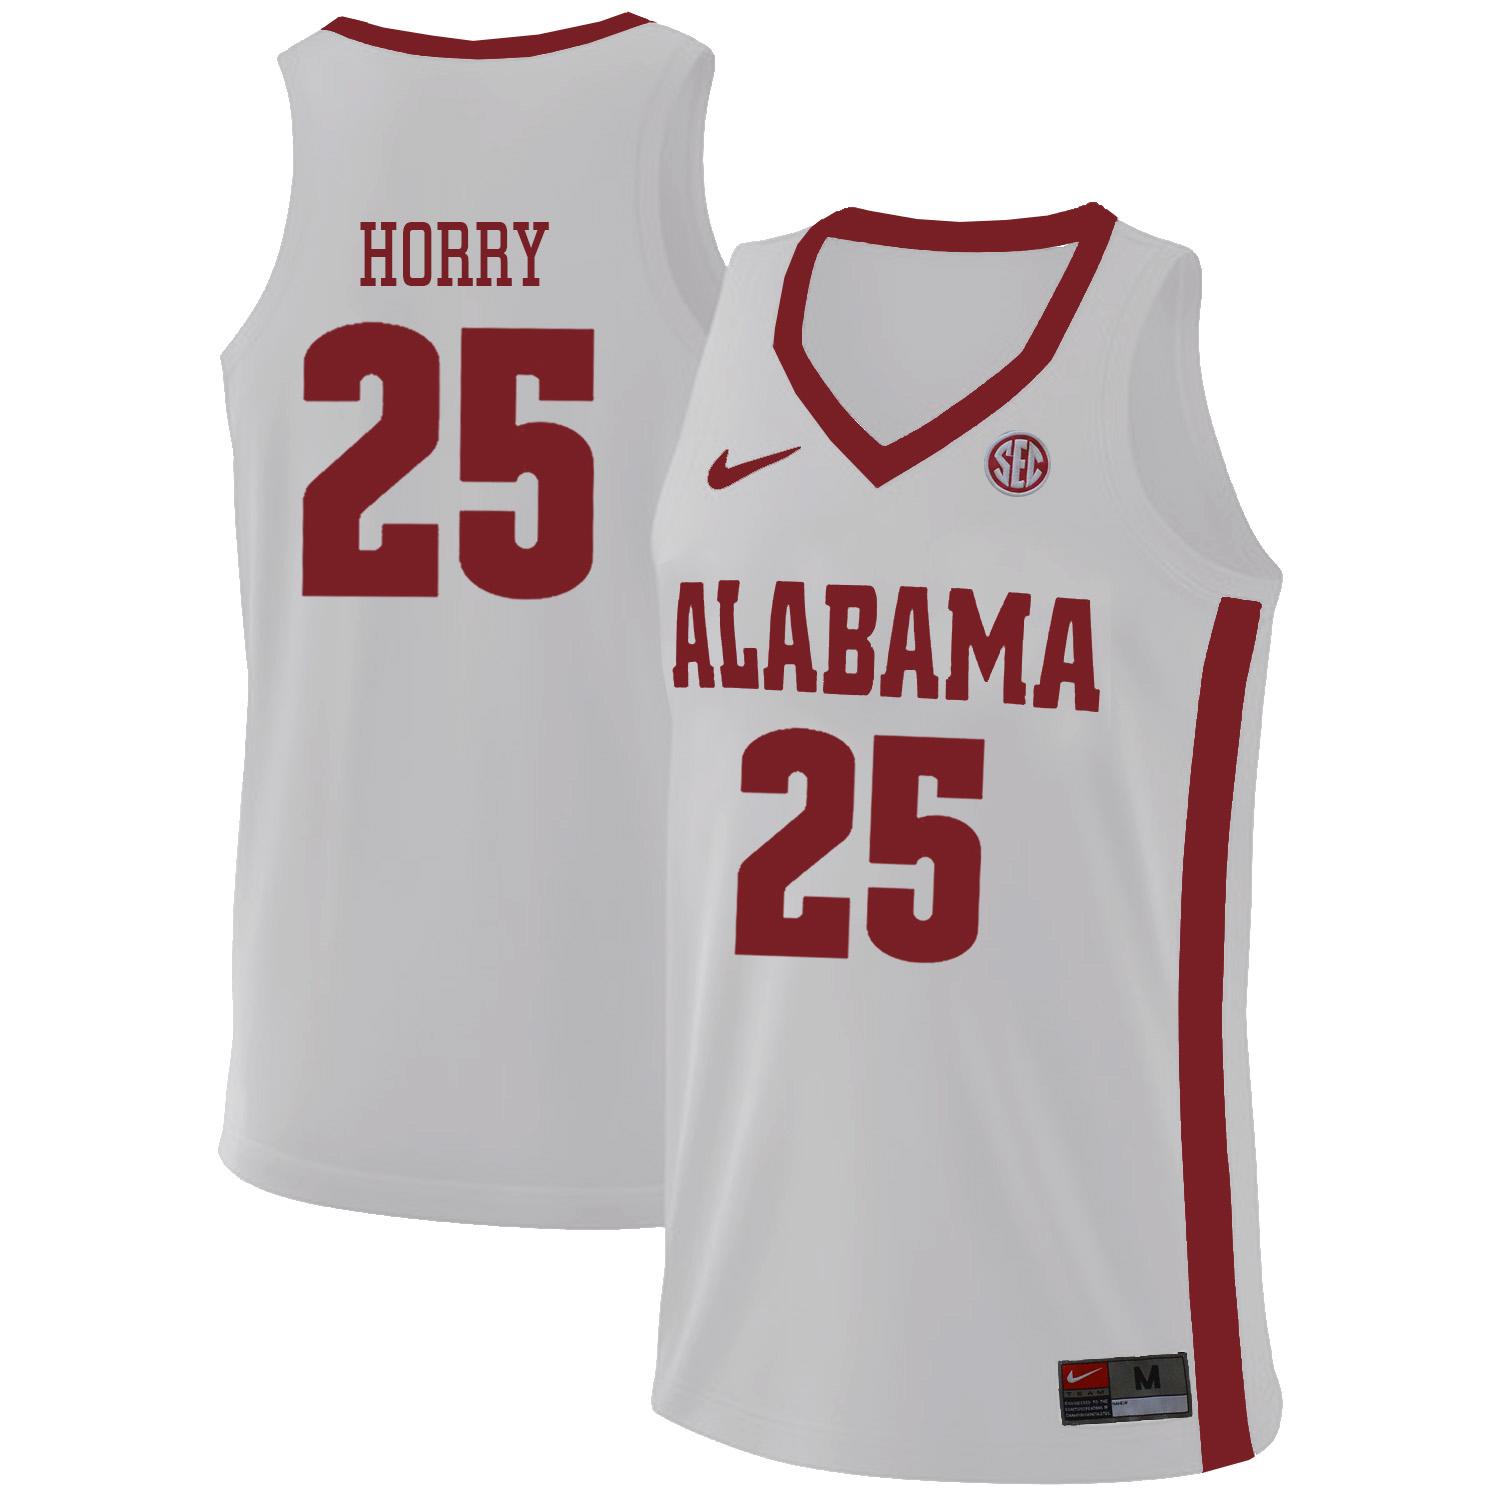 Alabama Crimson Tide 25 Robert Horry White College Basketball Jersey